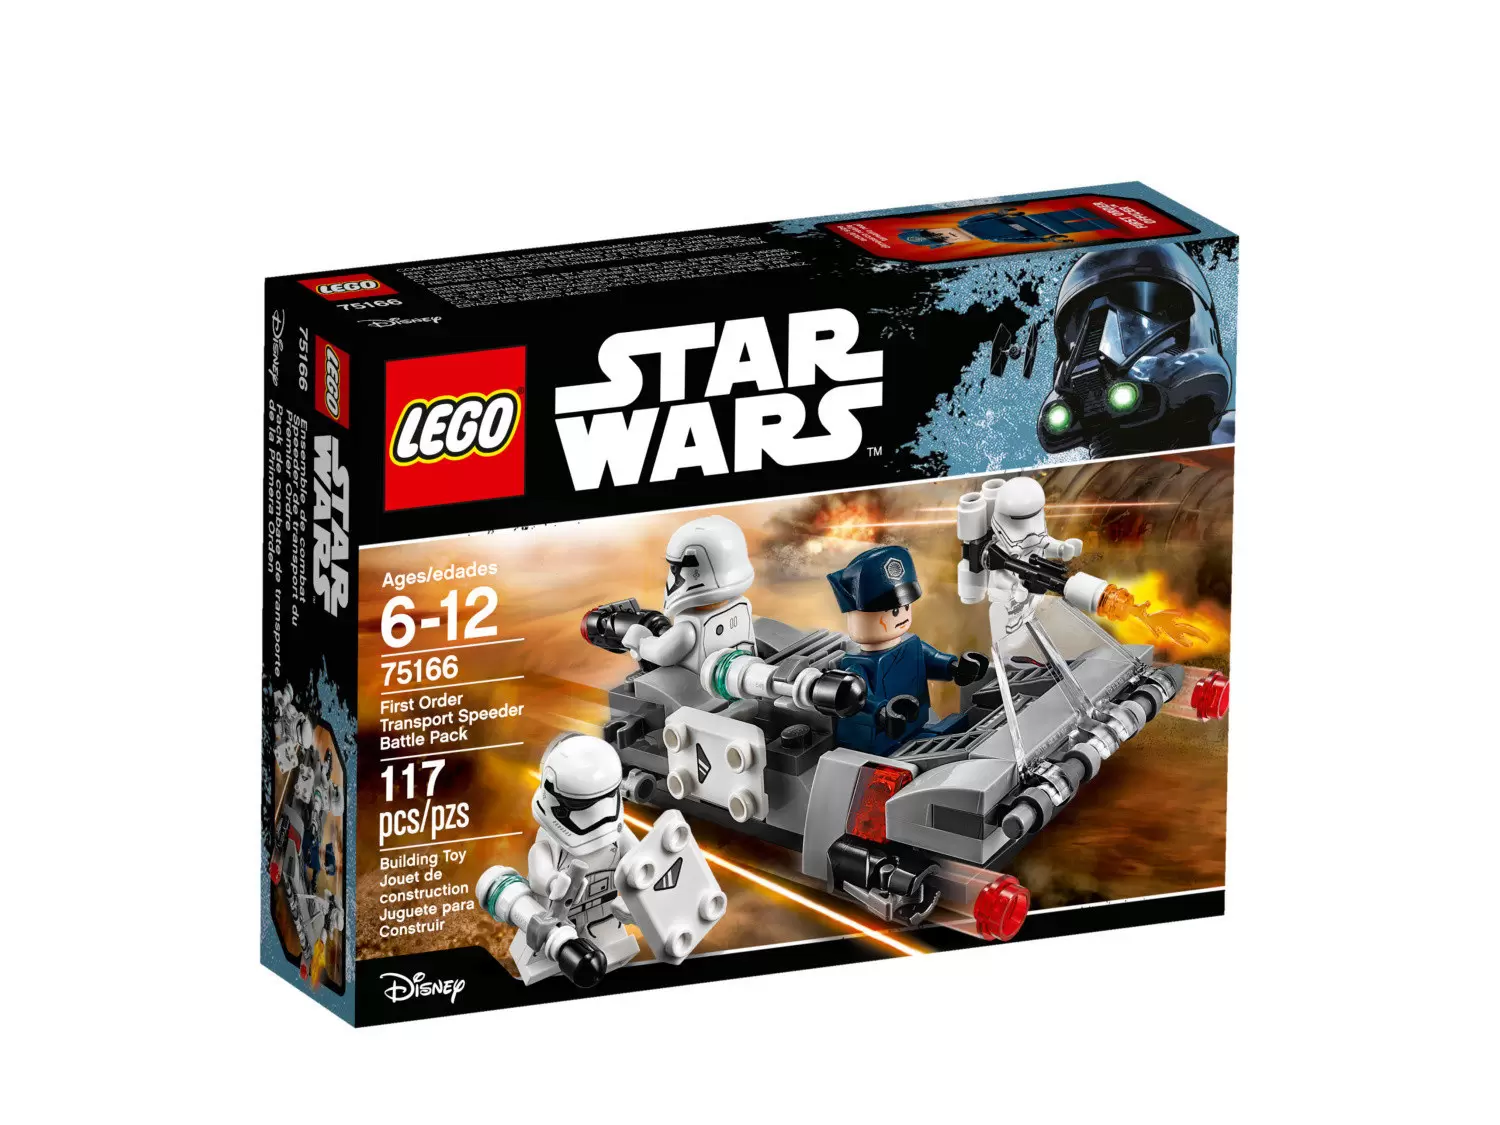 LEGO Star Wars - First Order Transport Speeder Battle Pack